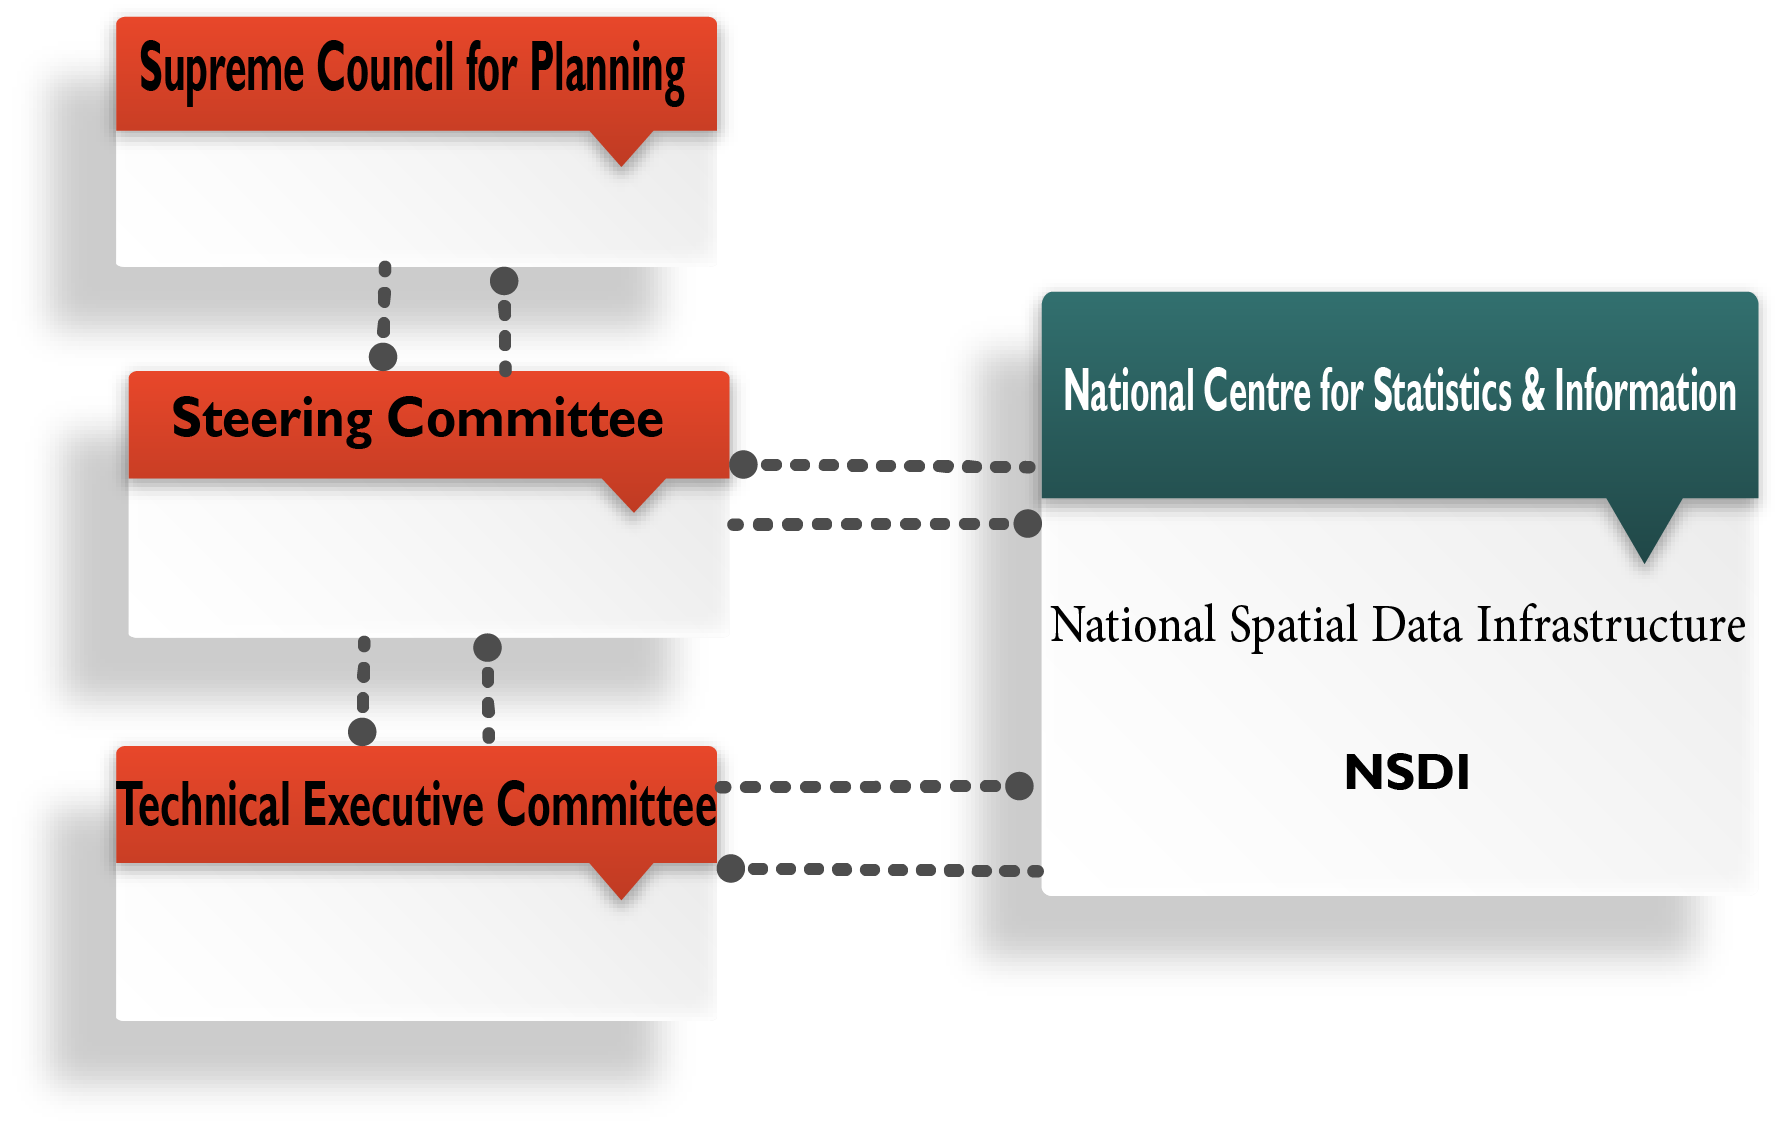 About NSDI Program